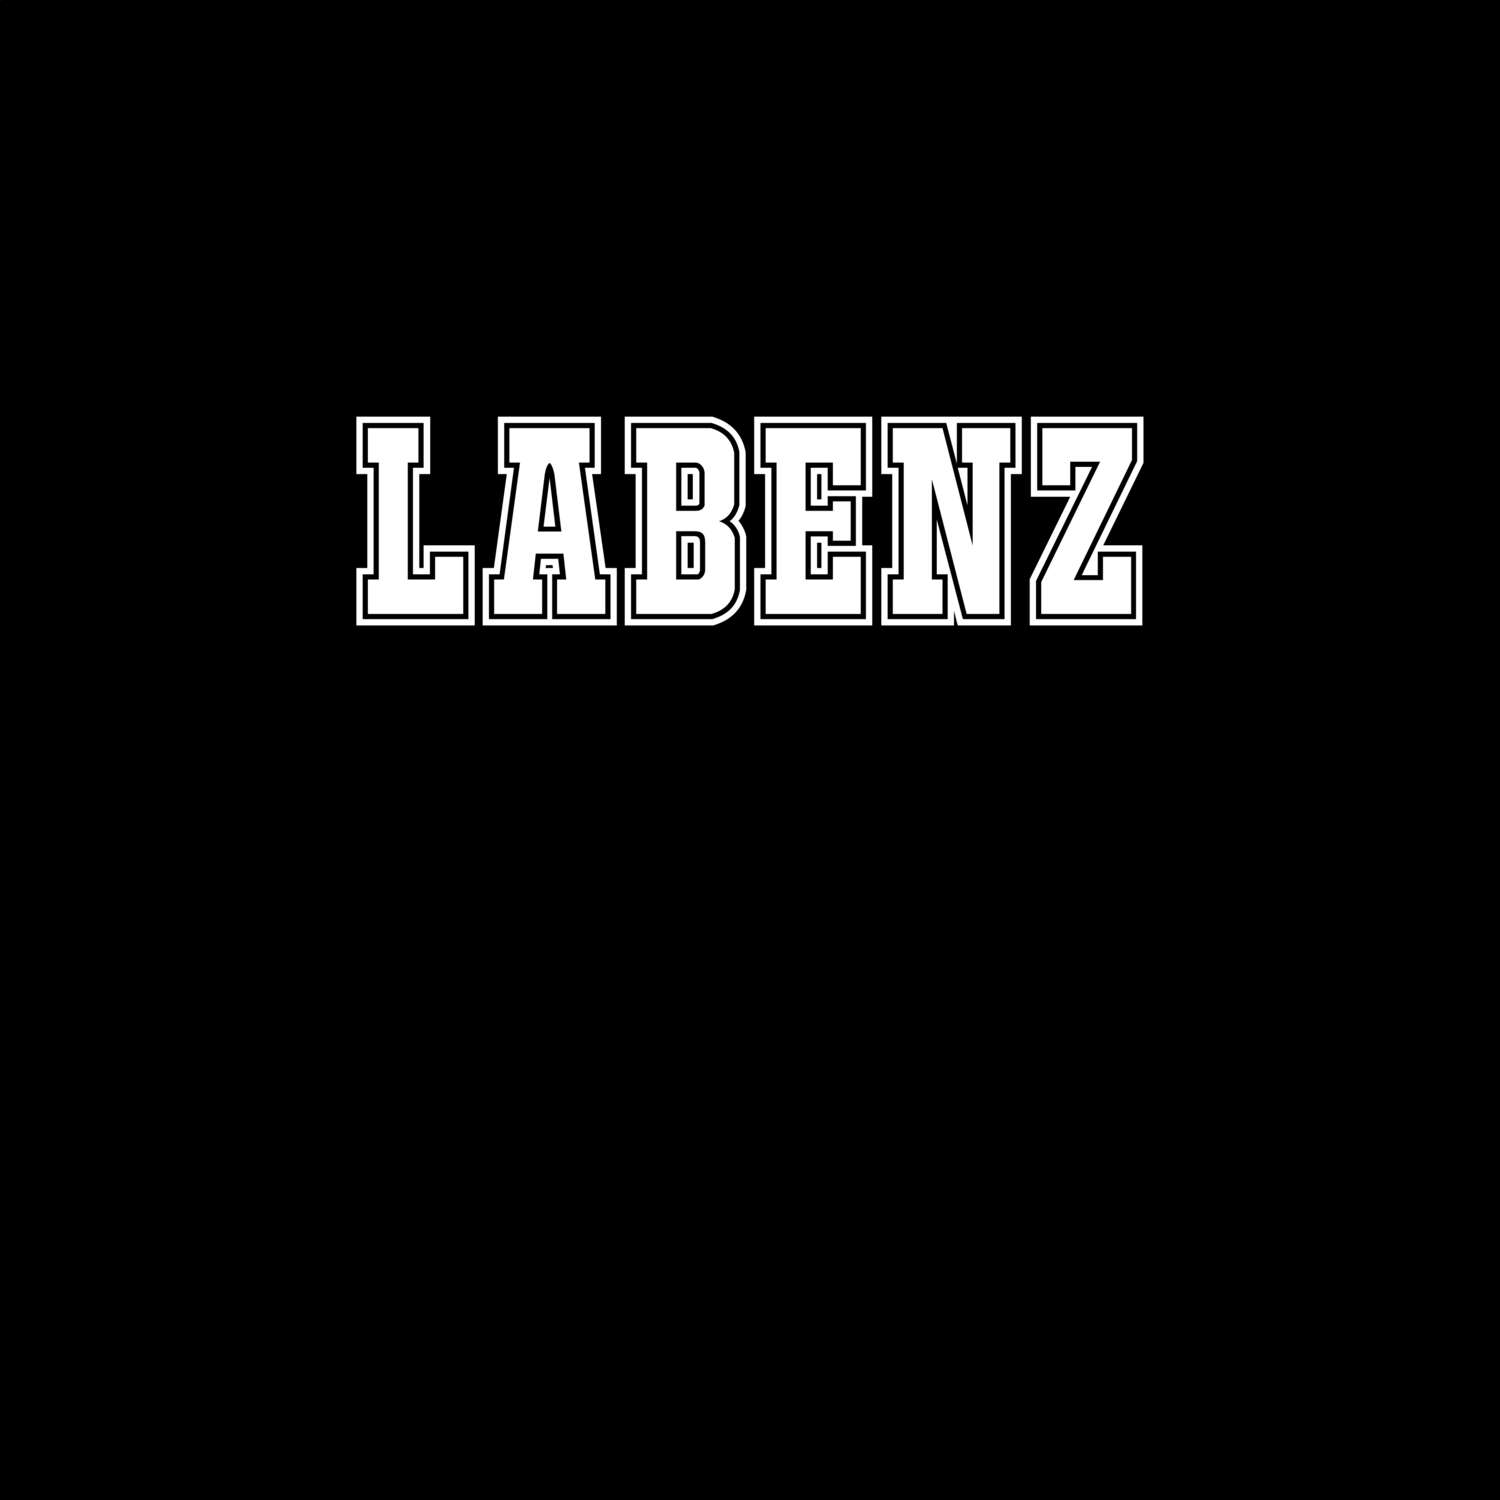 Labenz T-Shirt »Classic«